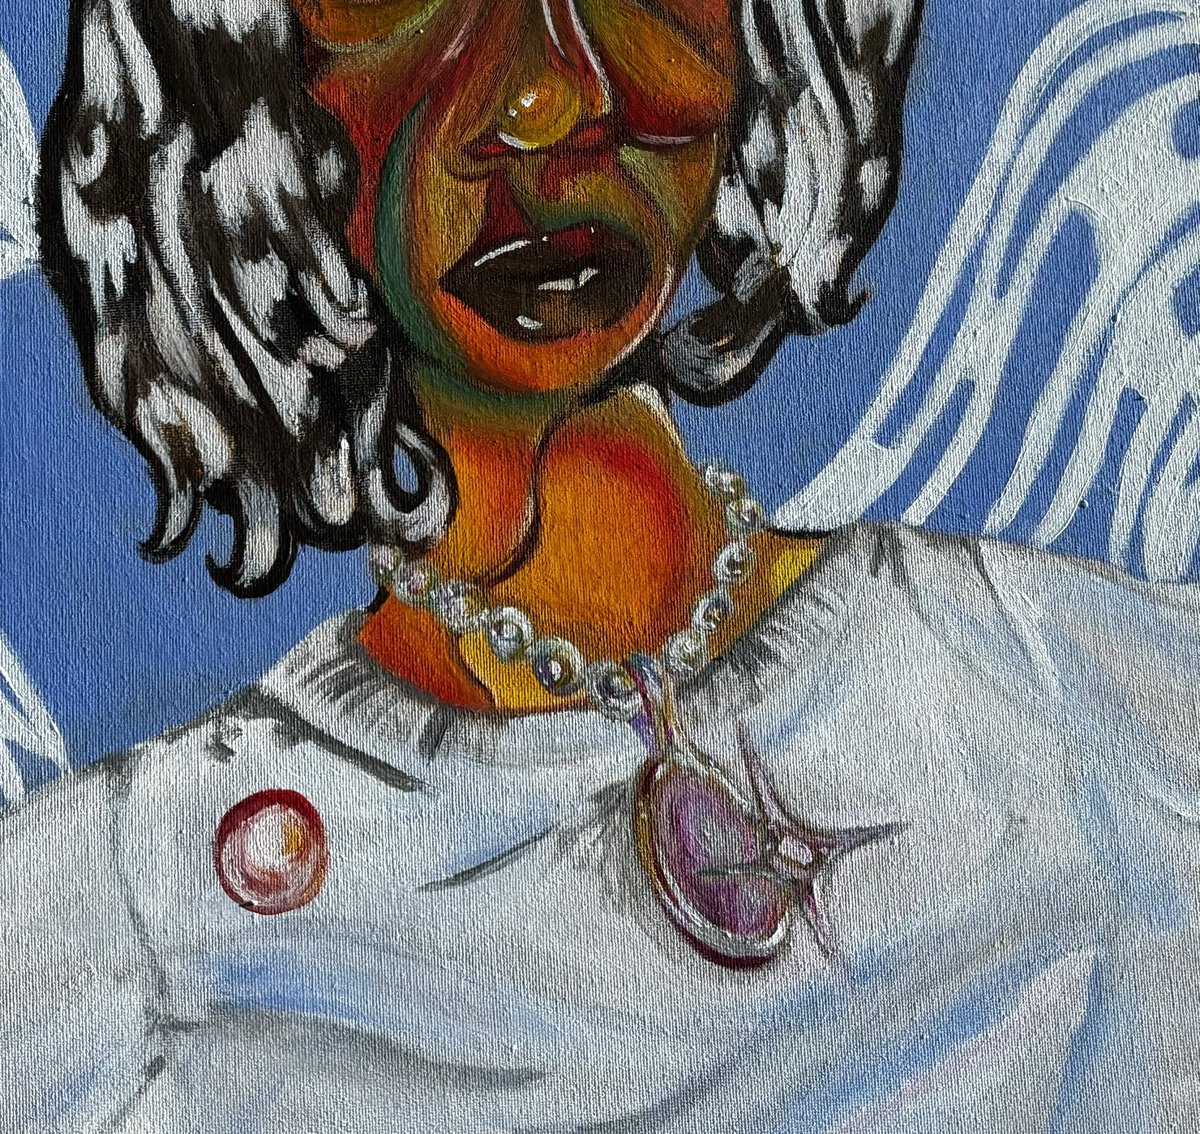 kuangaza Oil pastels x Acrylic on canvas 18x28